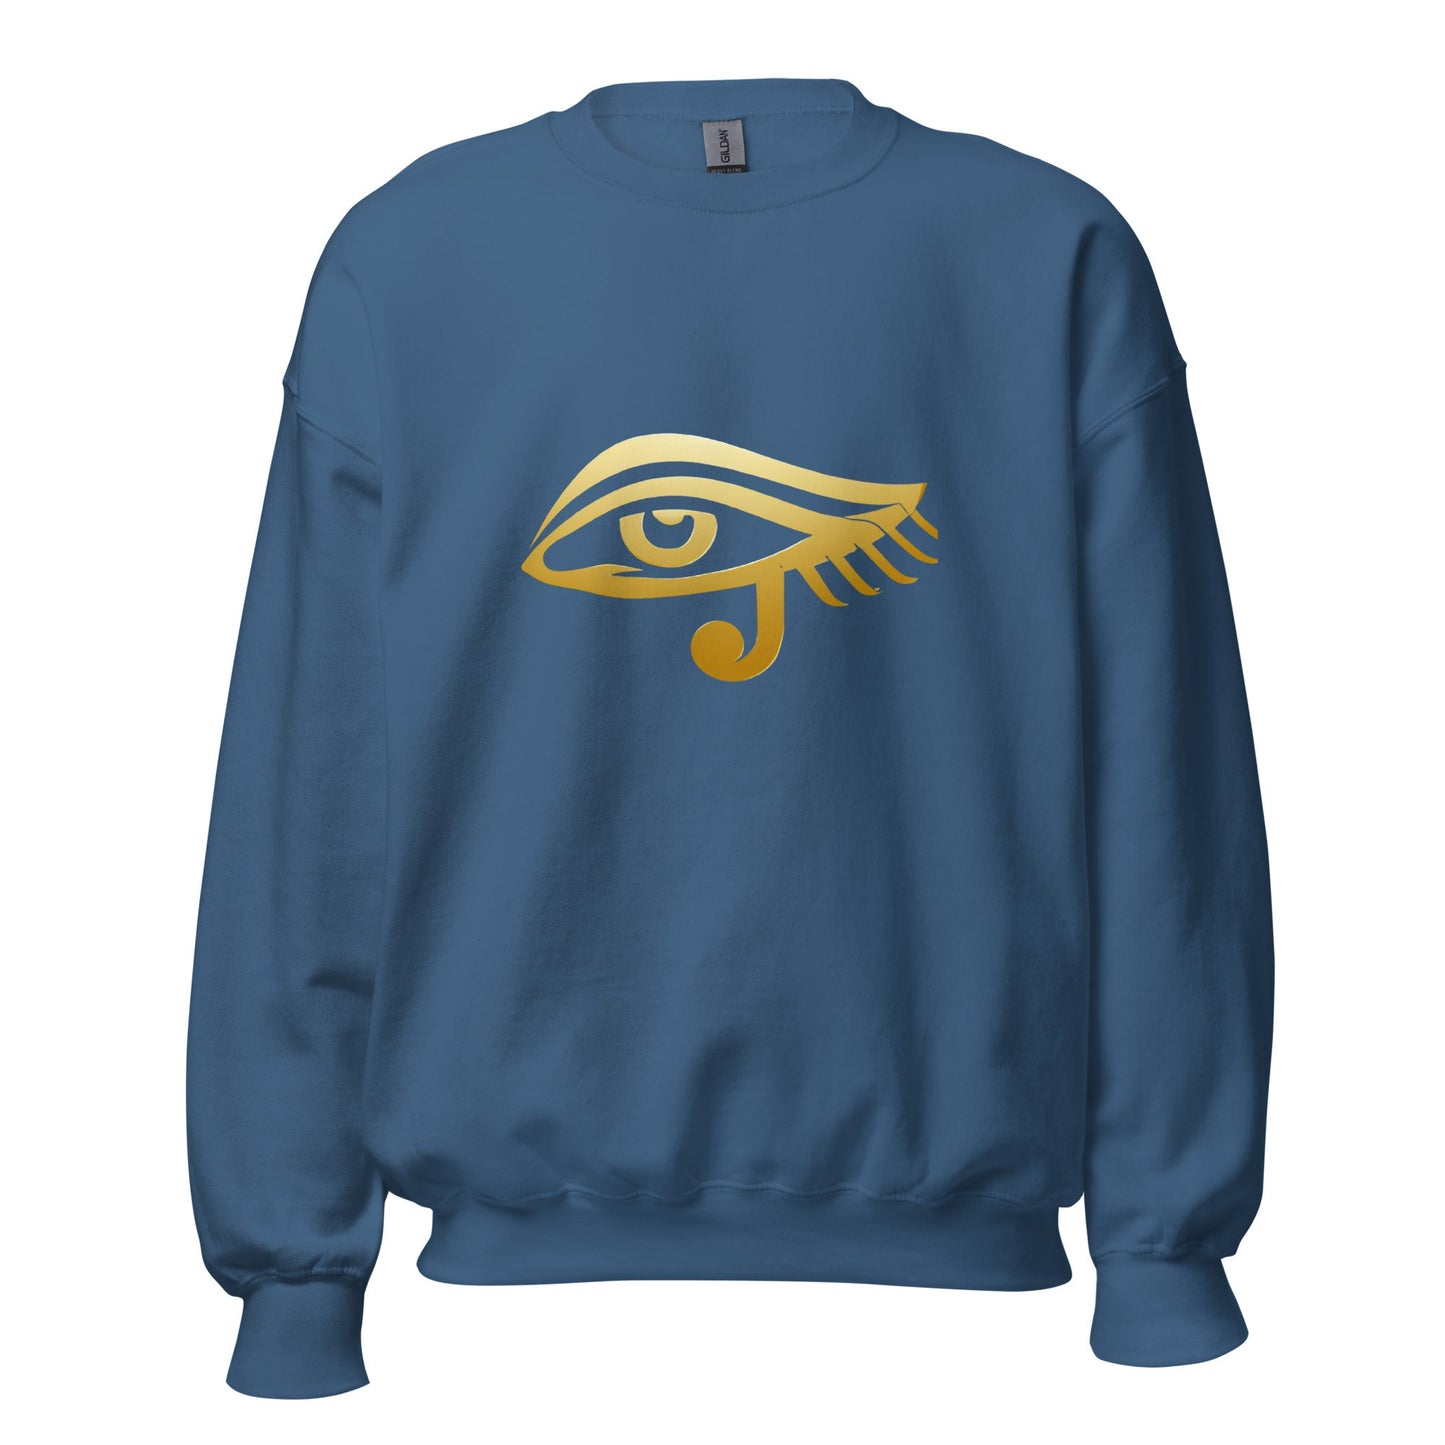 Eye of Horus Sweatshirt Men